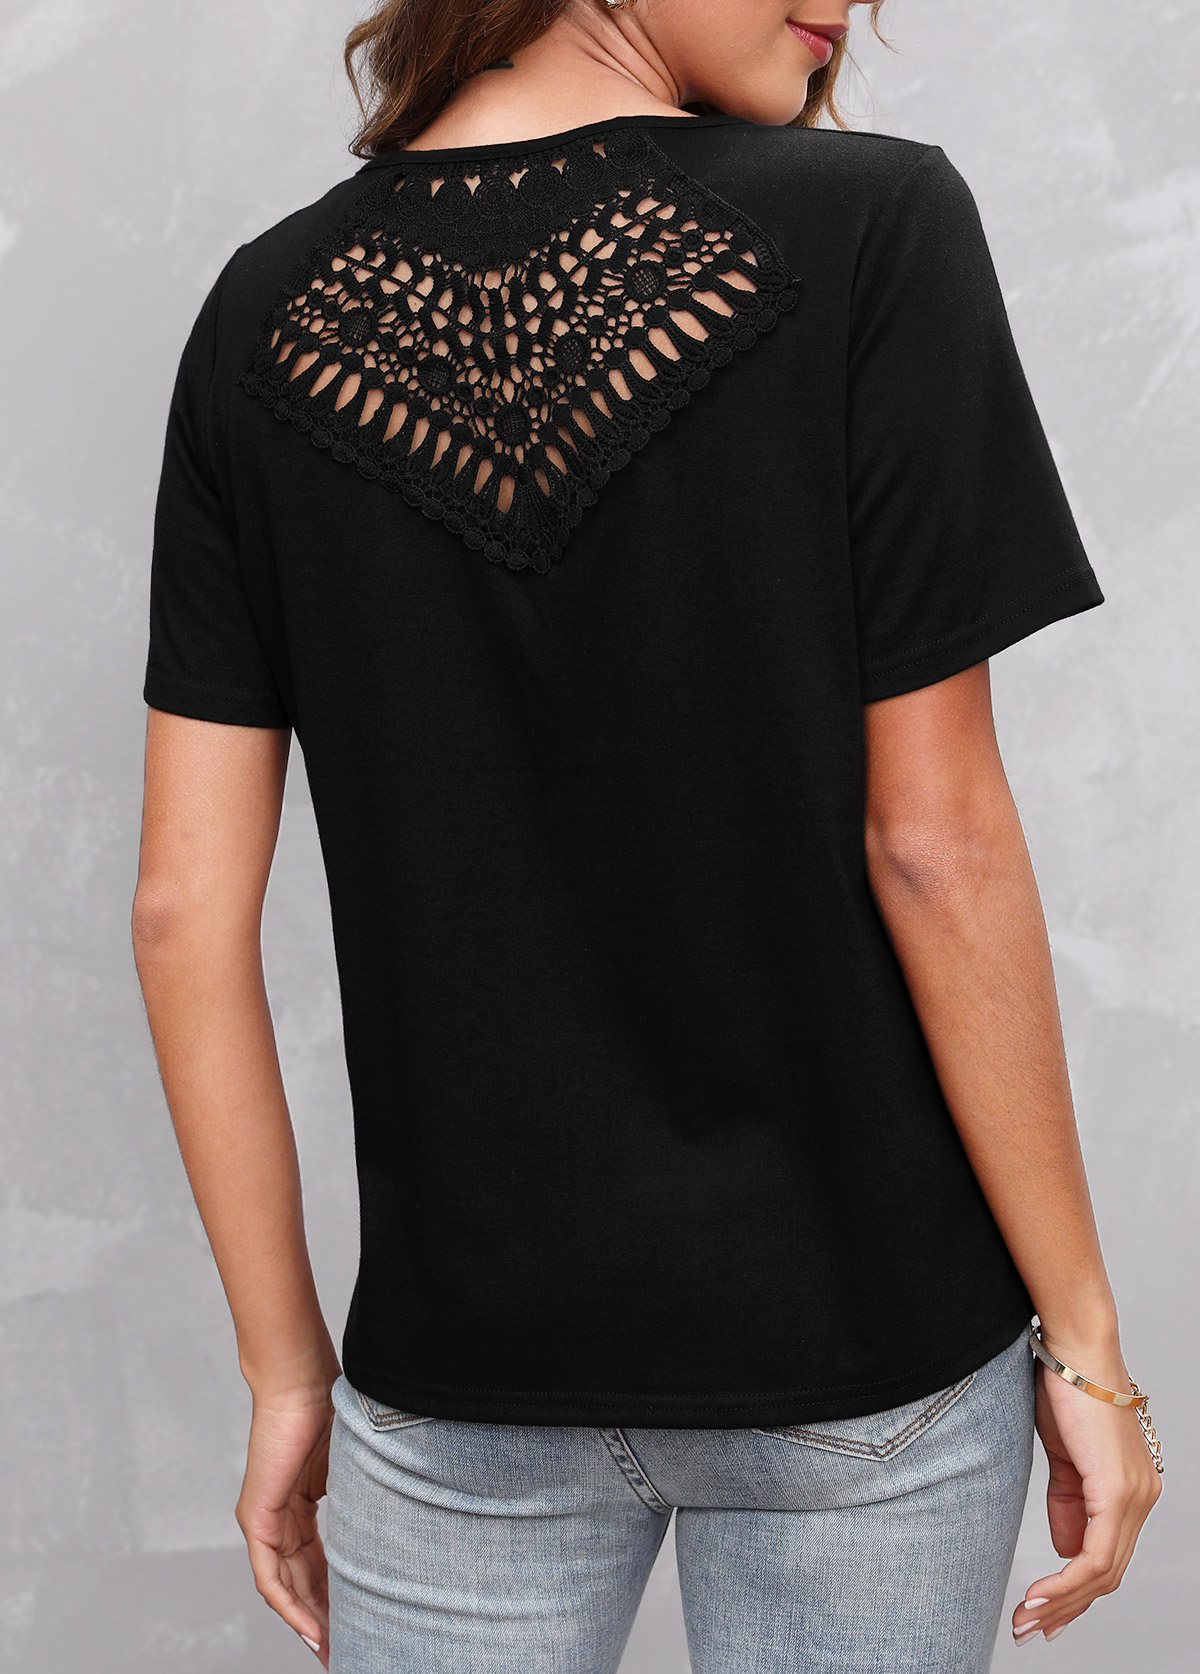 Lace Patchwork Black Short Sleeve Round Neck T Shirt